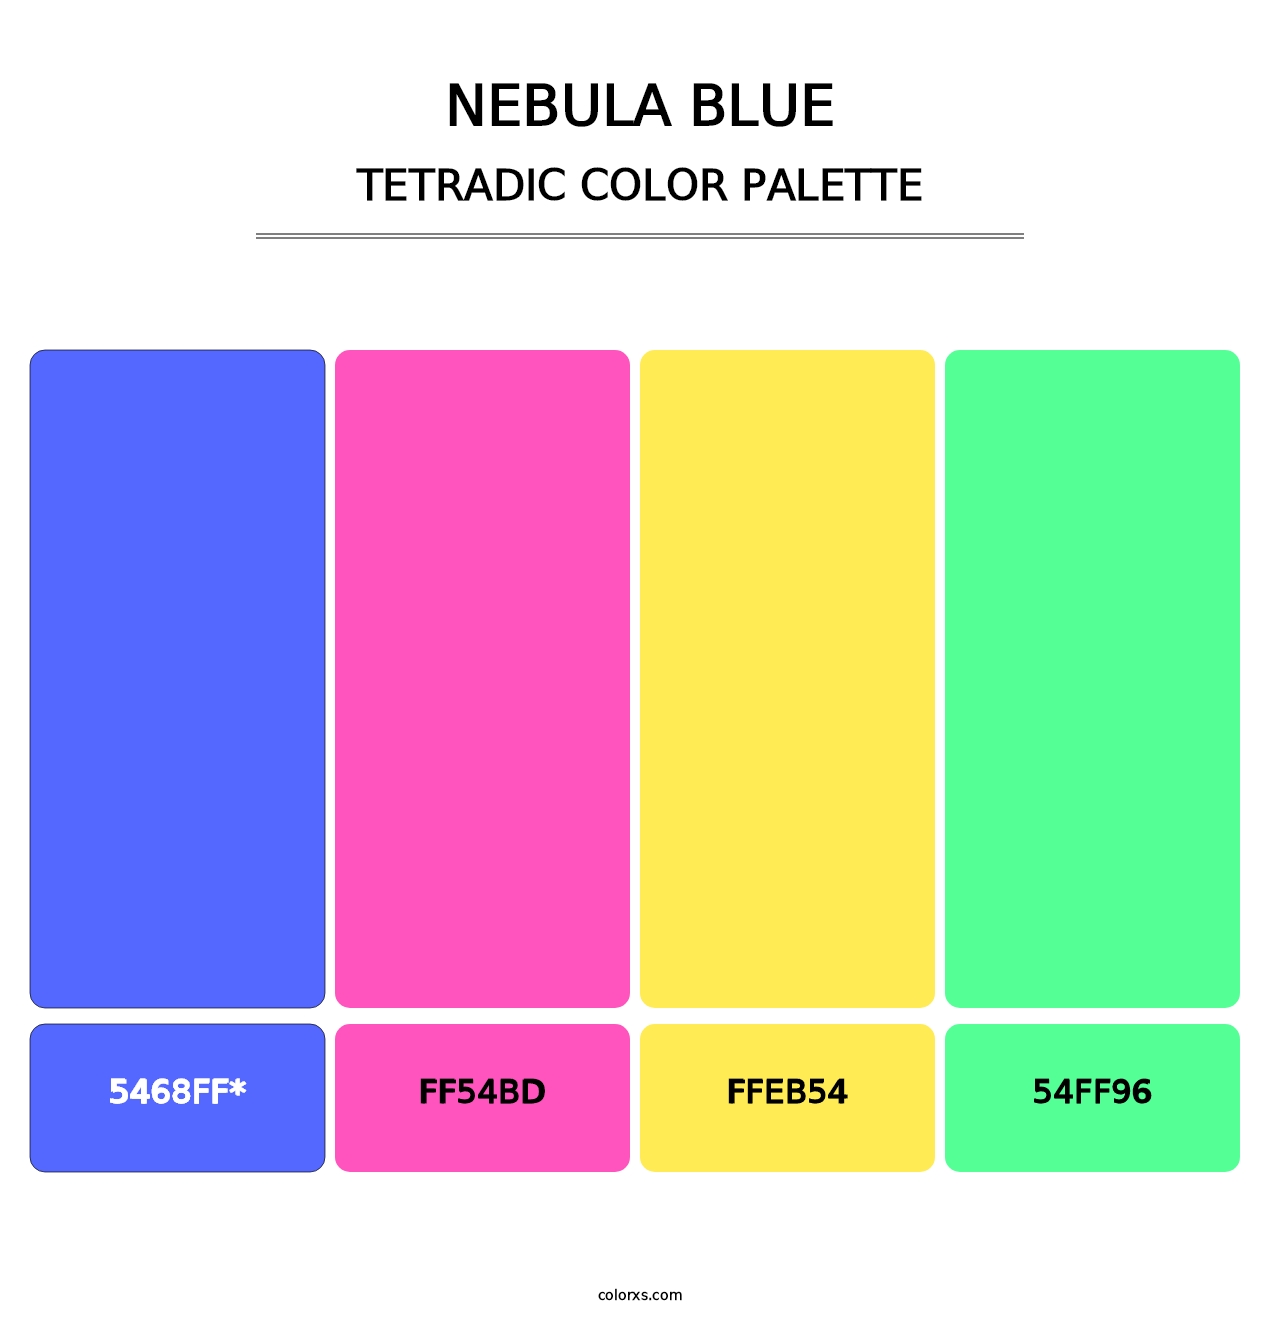 Nebula Blue - Tetradic Color Palette